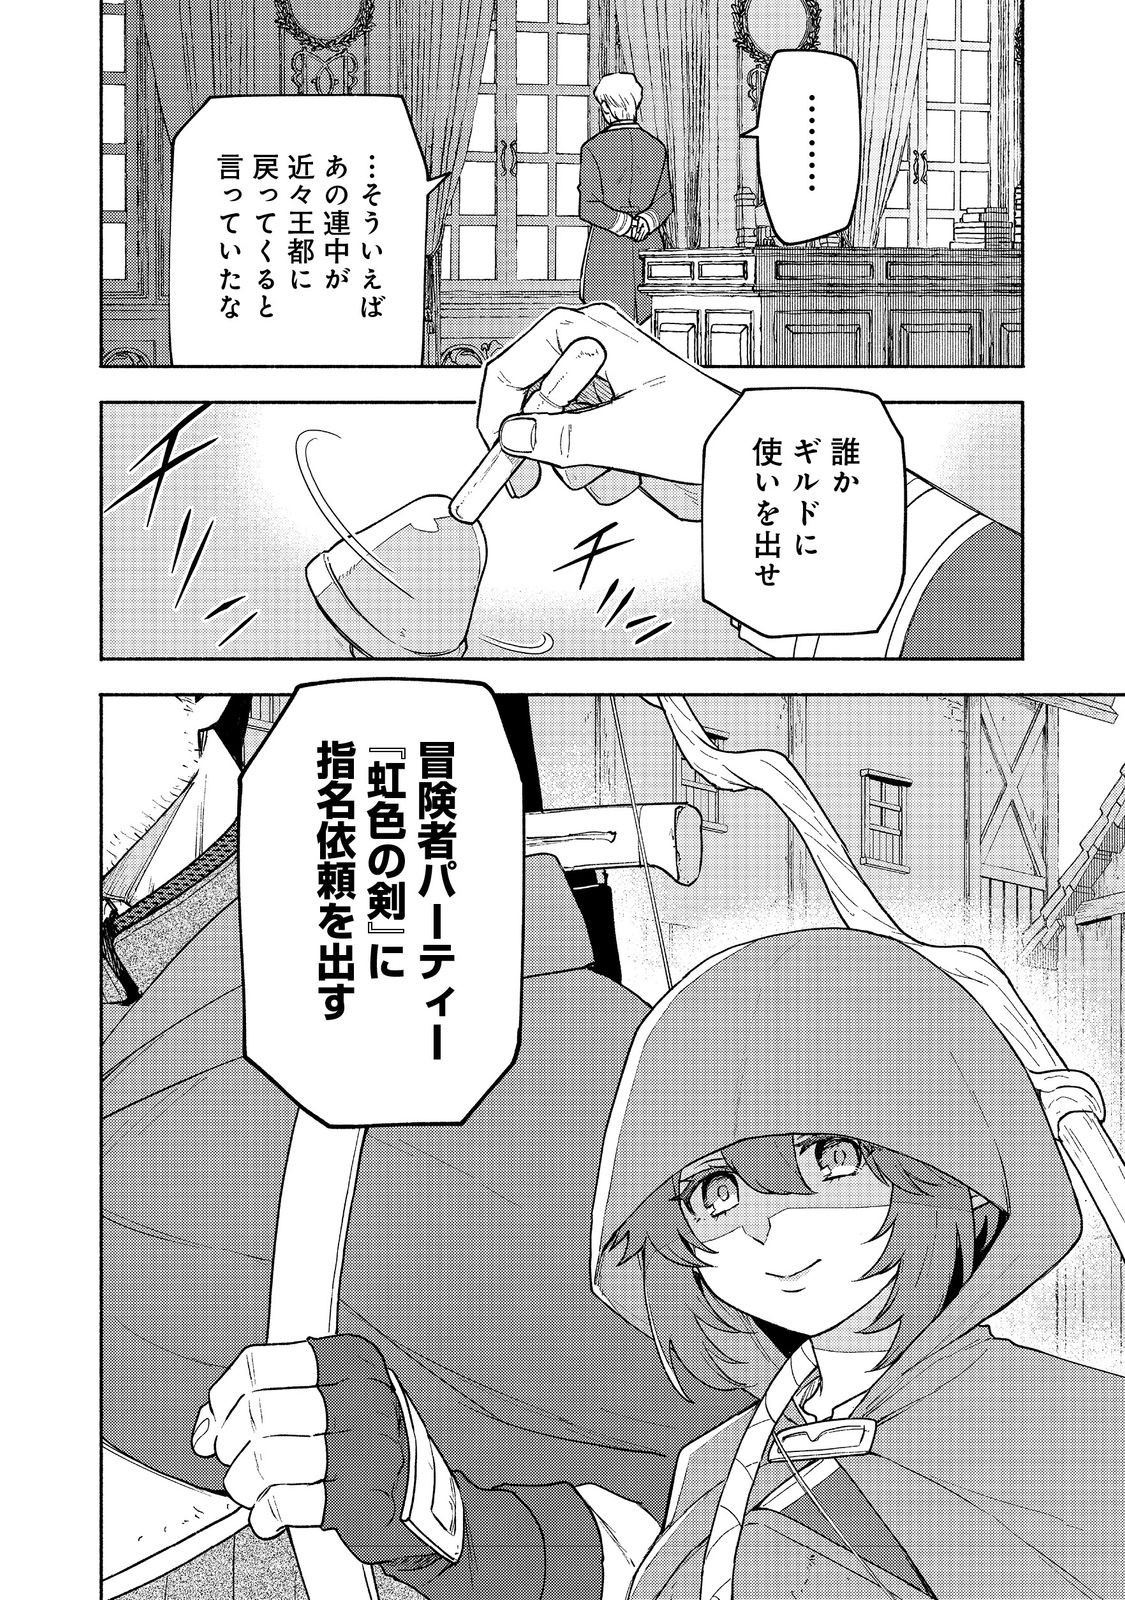 Otome Game no Heroine de Saikyou Survival - Chapter 19.2 - Page 22